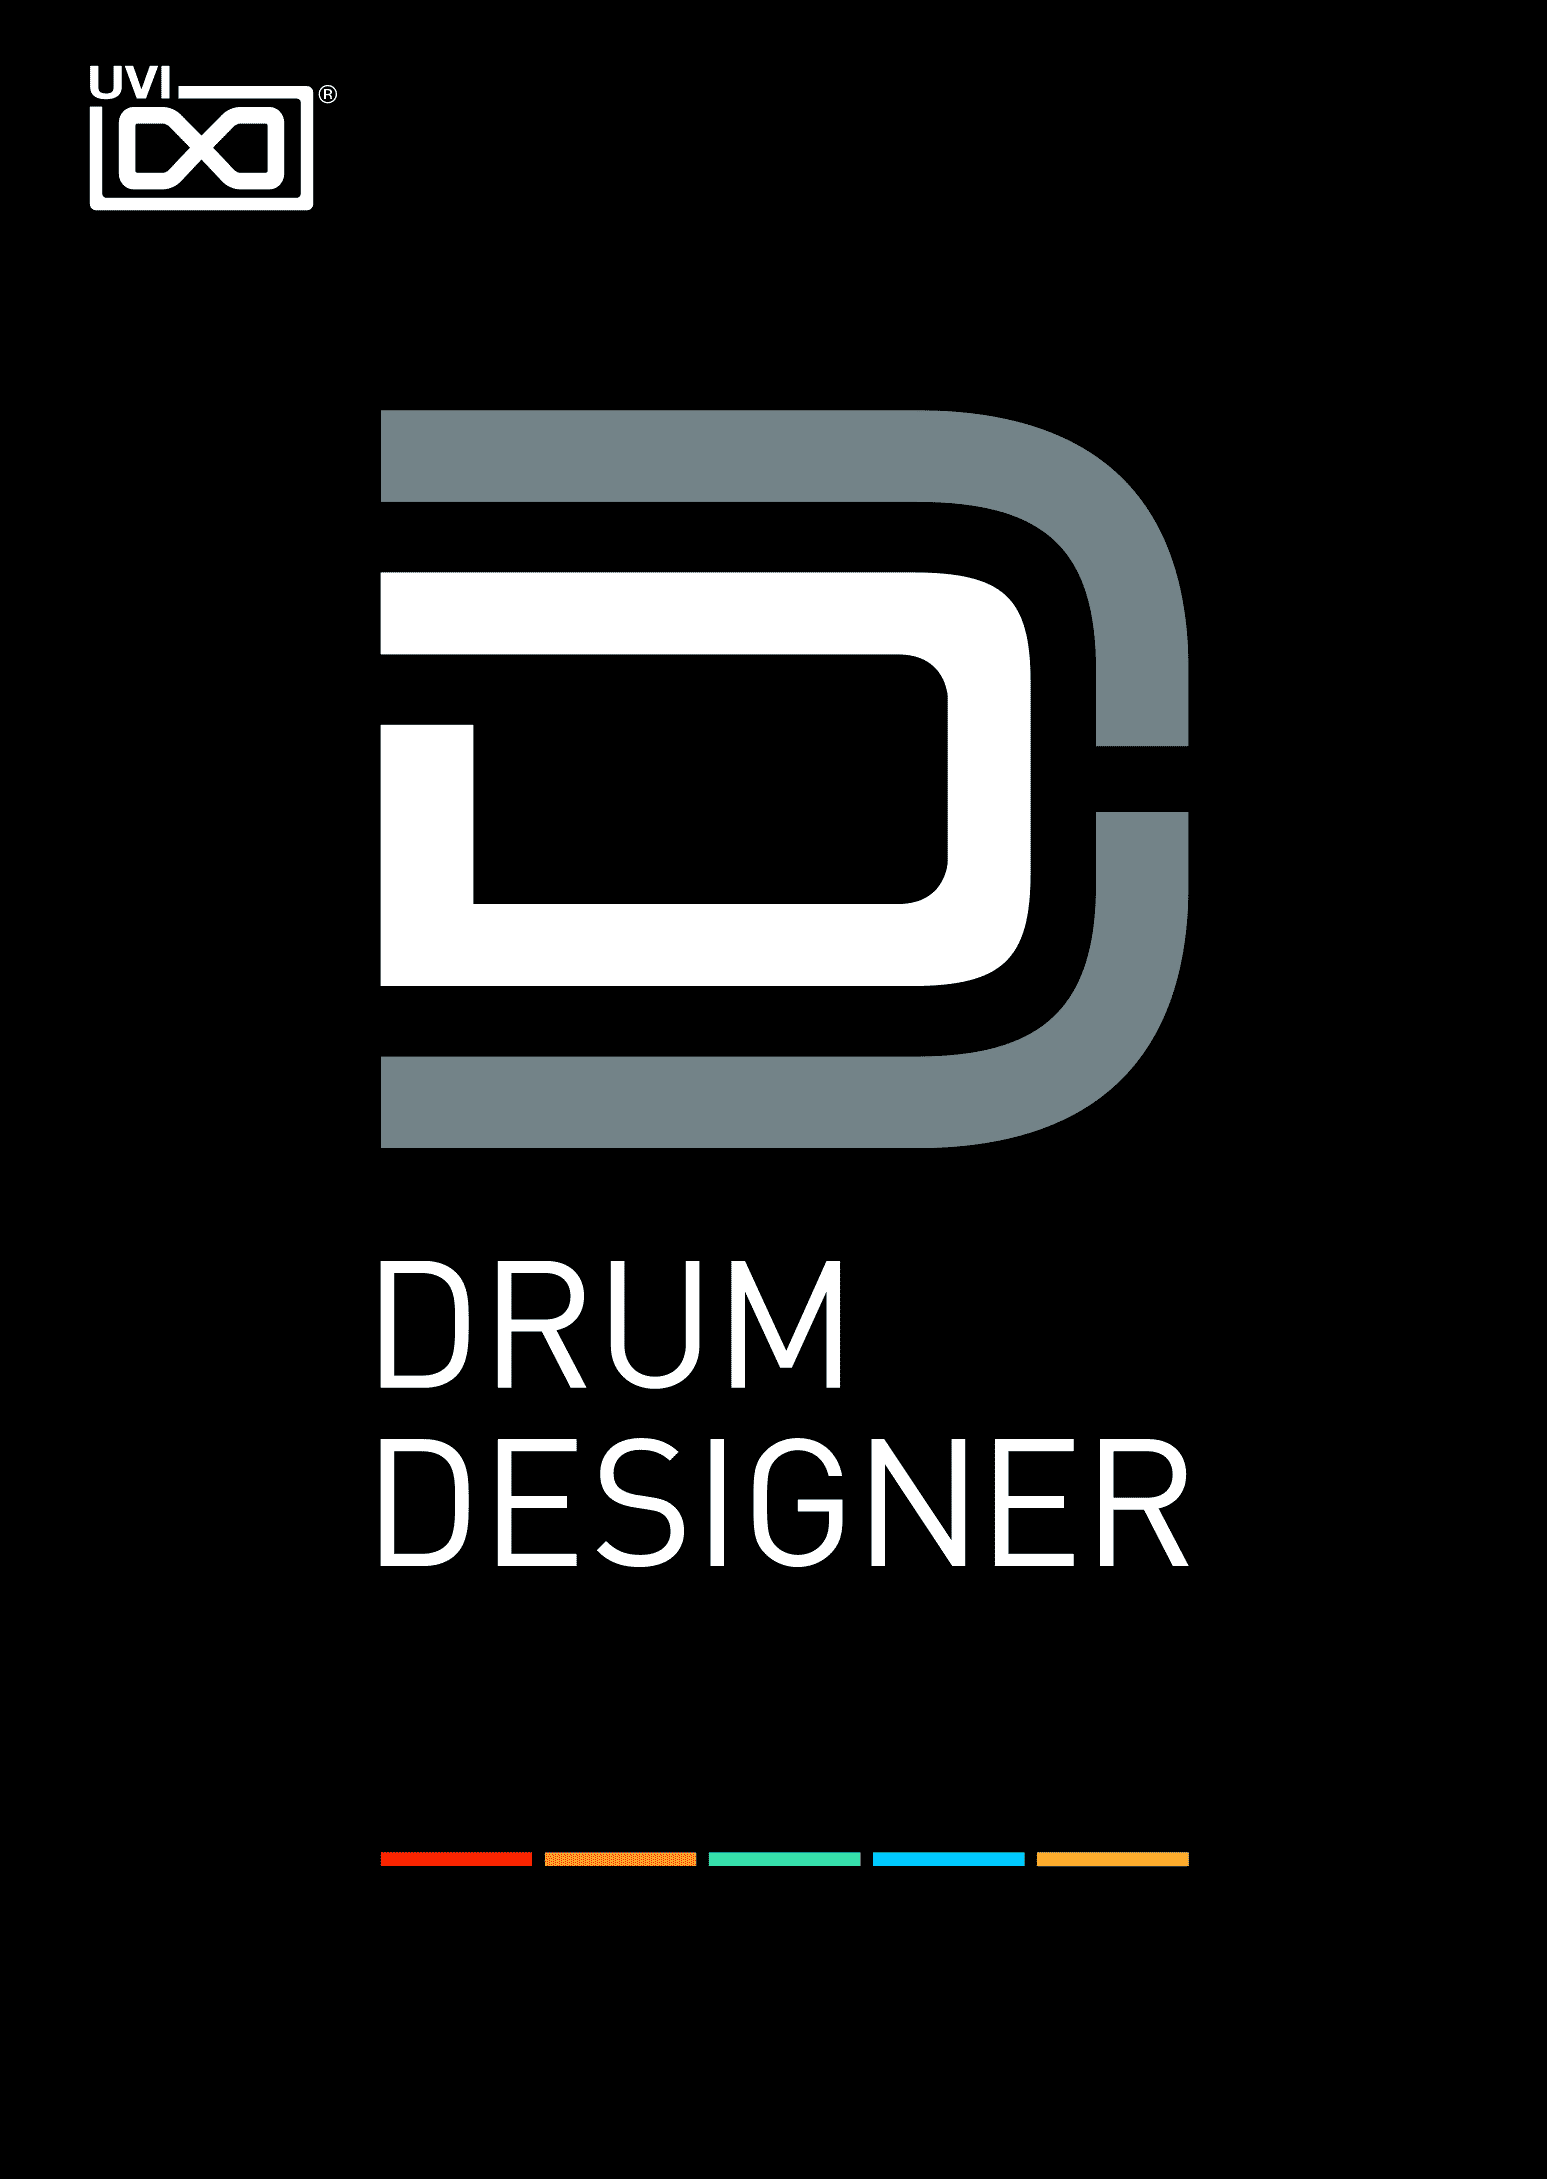 50% off “Drum Designer” by UVI